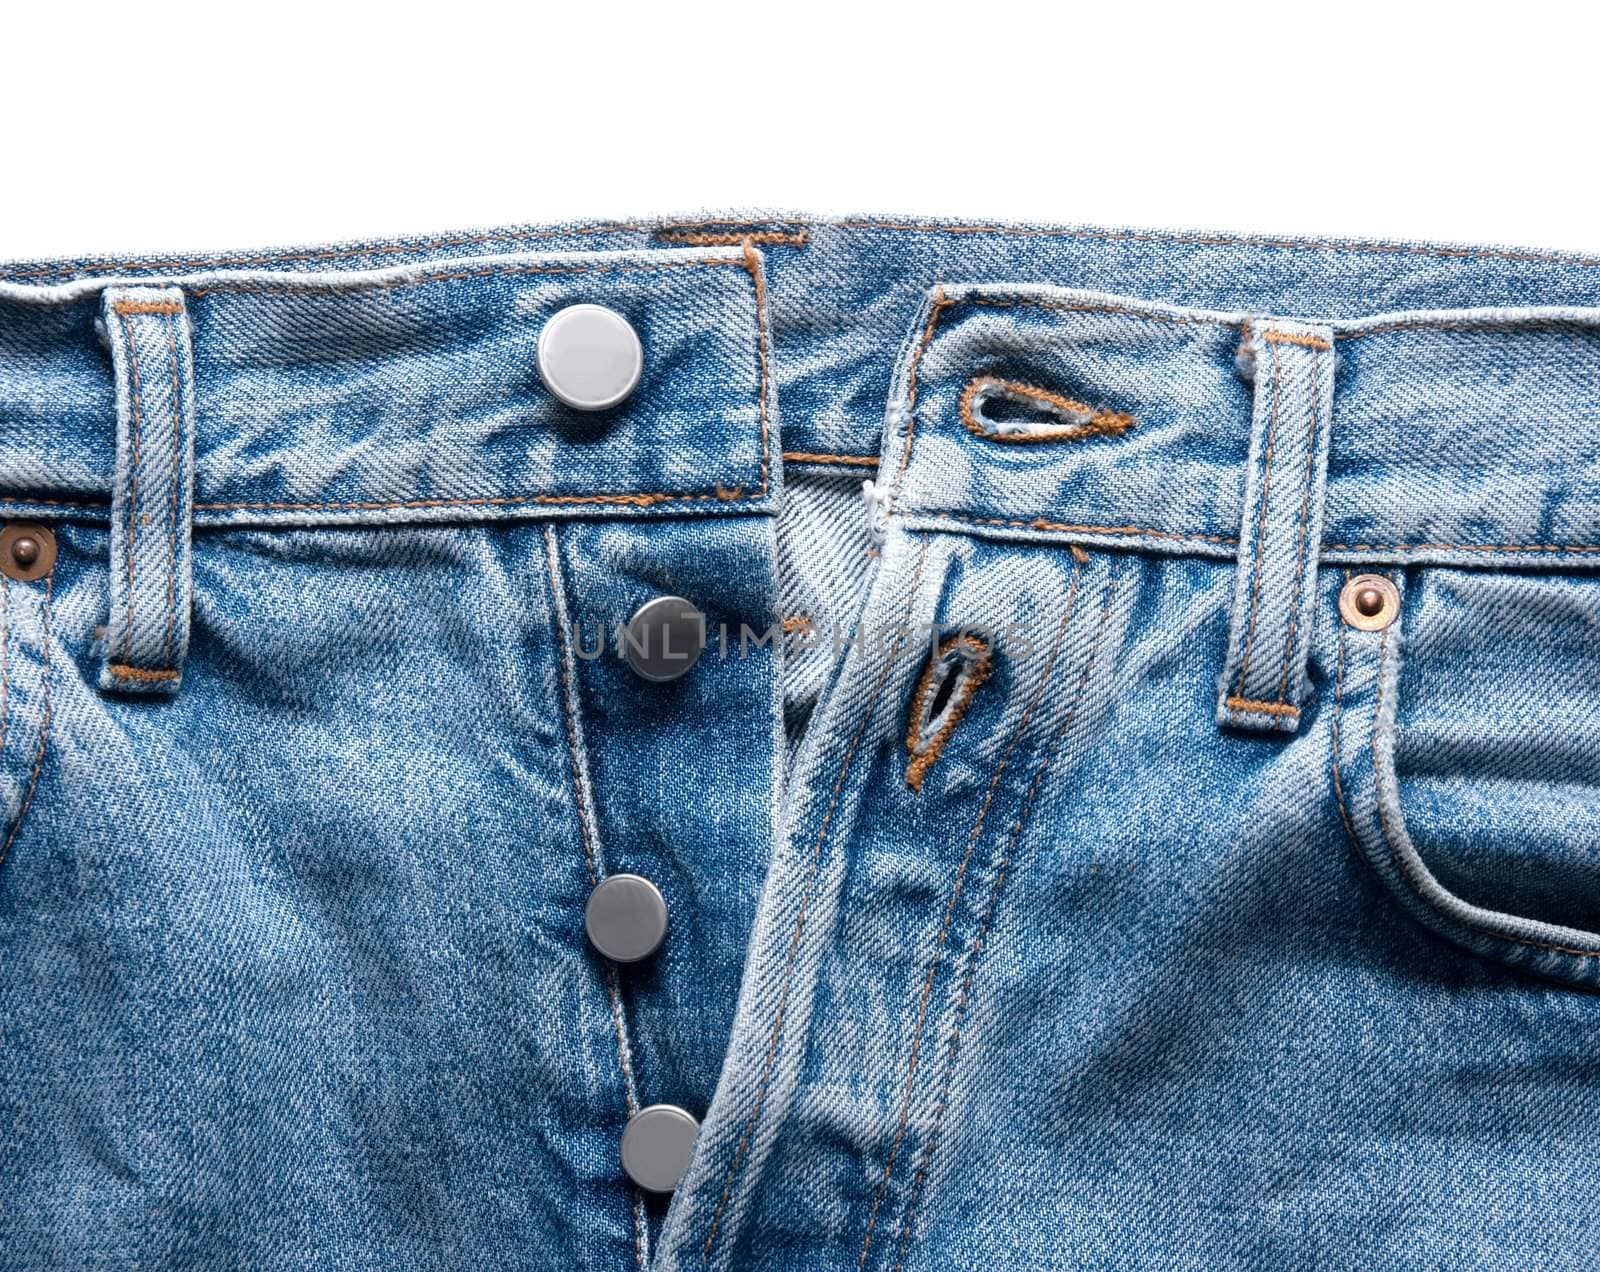 Closeup detail of a blue jeans